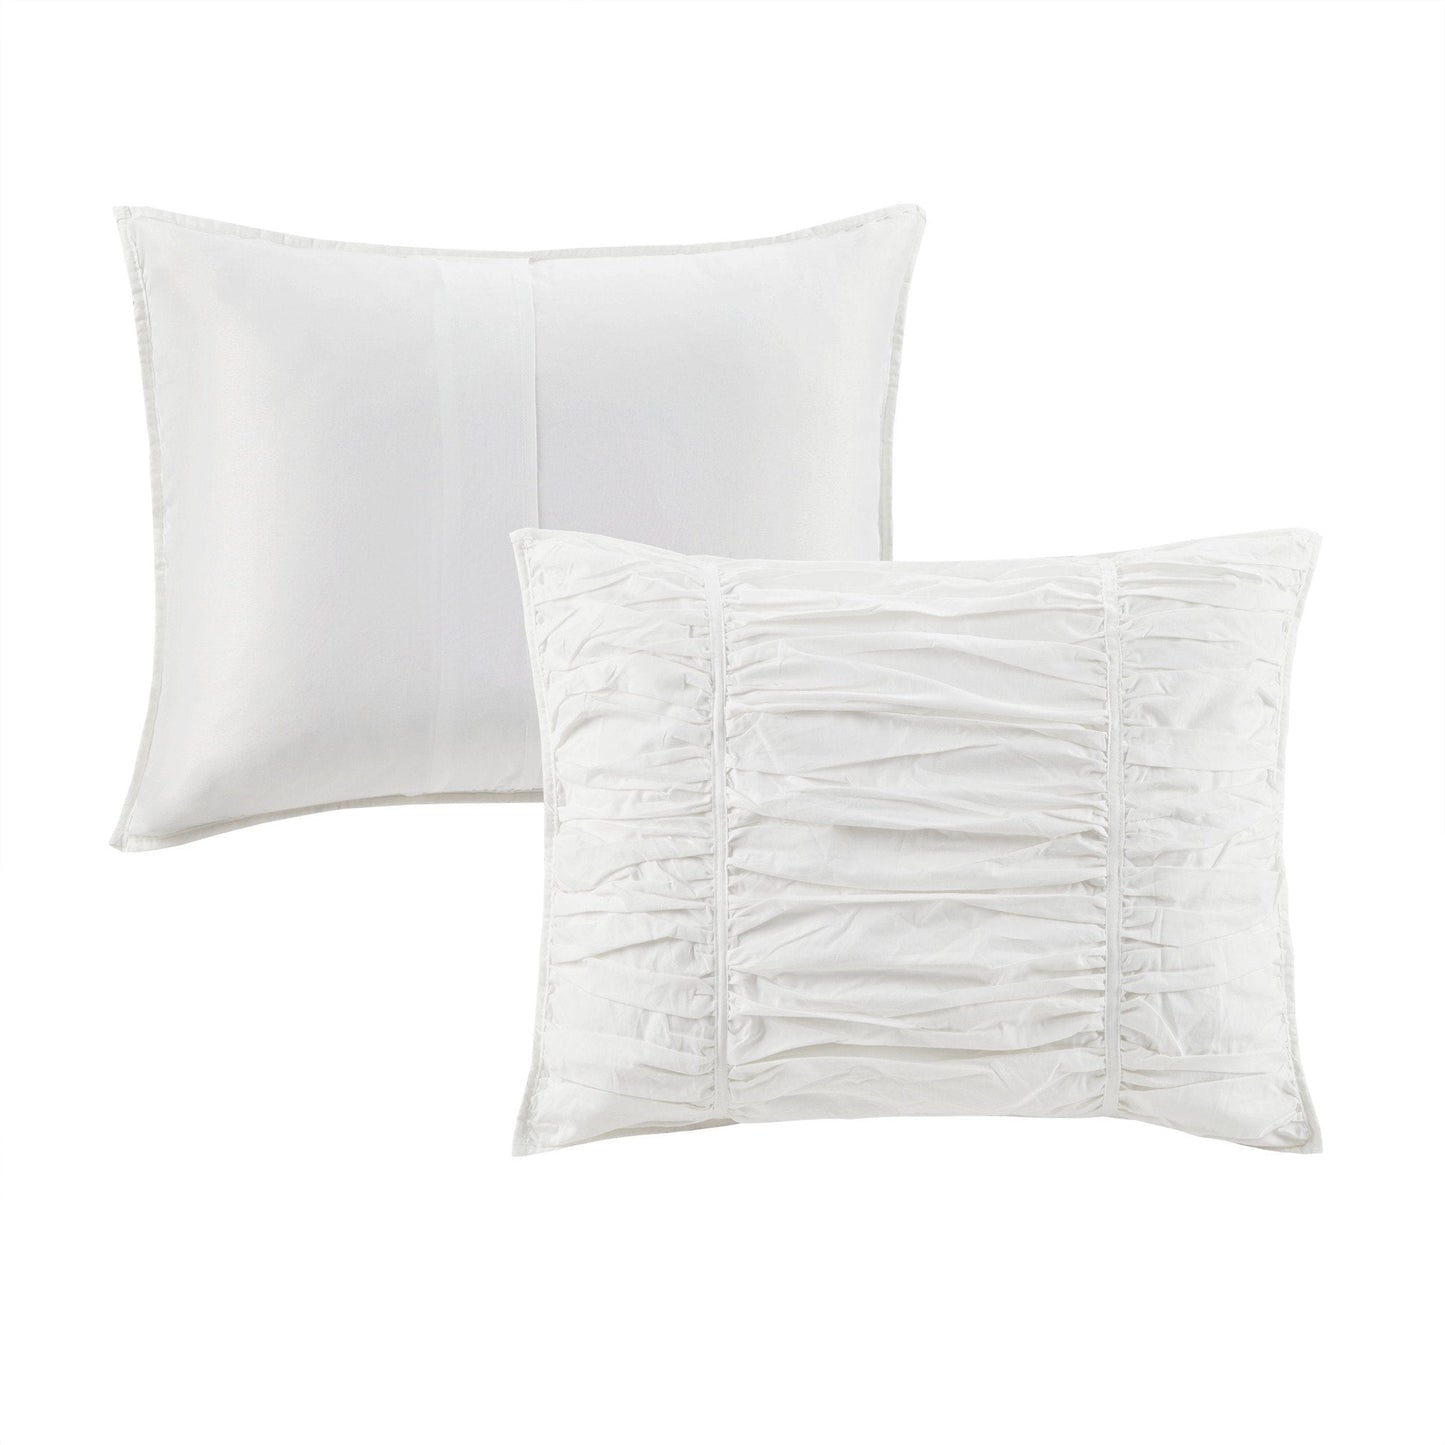 Delancey White 4-Piece Comforter Set Comforter Sets By Olliix/JLA HOME (E & E Co., Ltd)